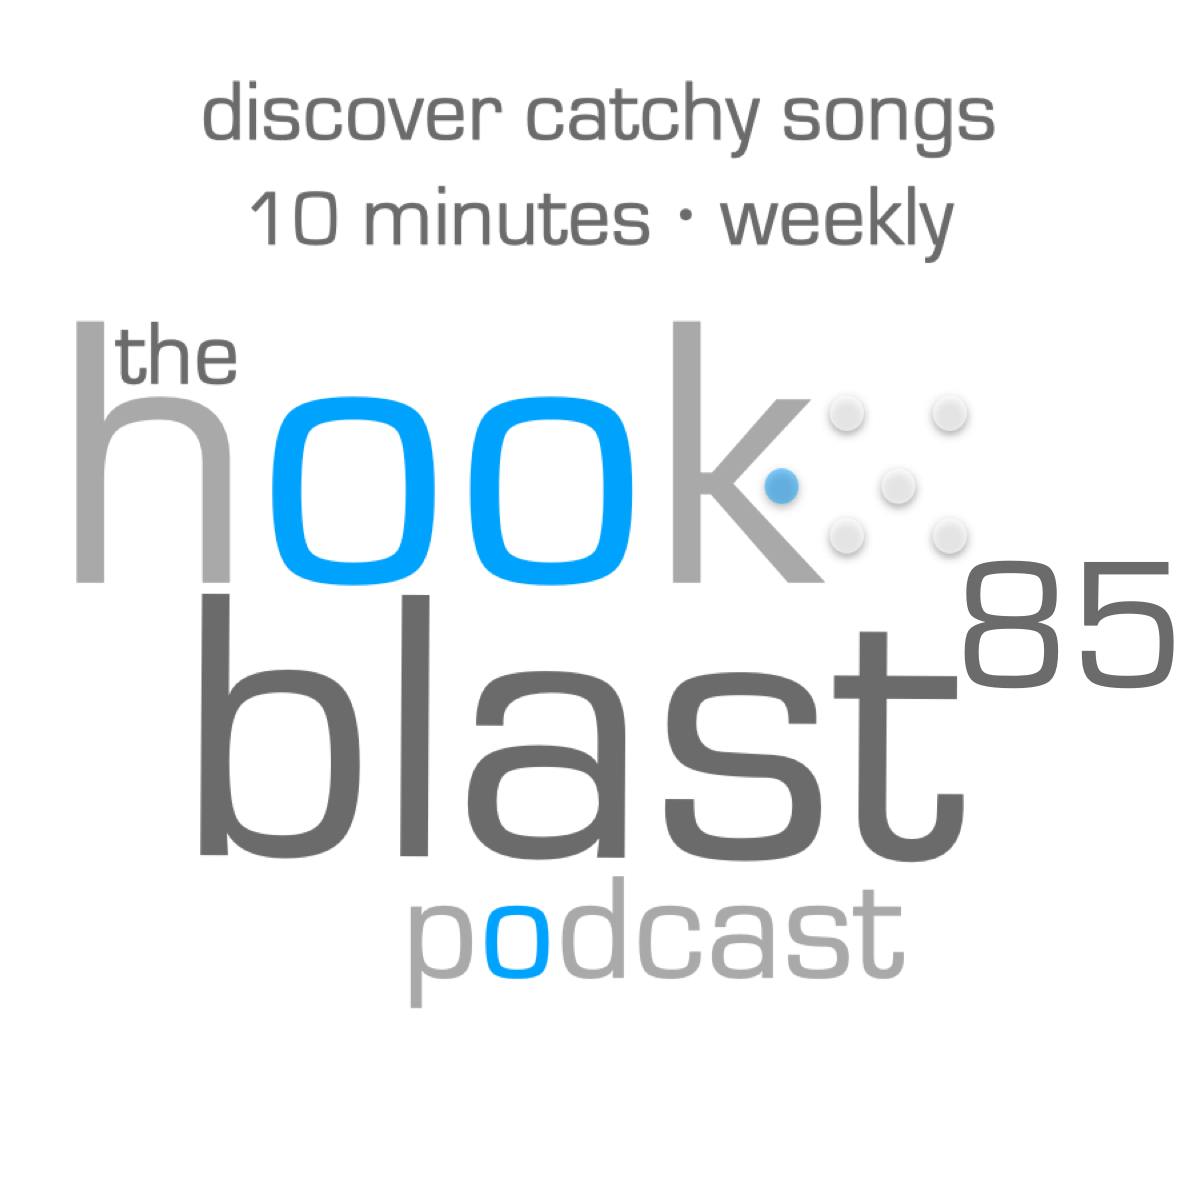 The Hookblast Podcast - Episode 85